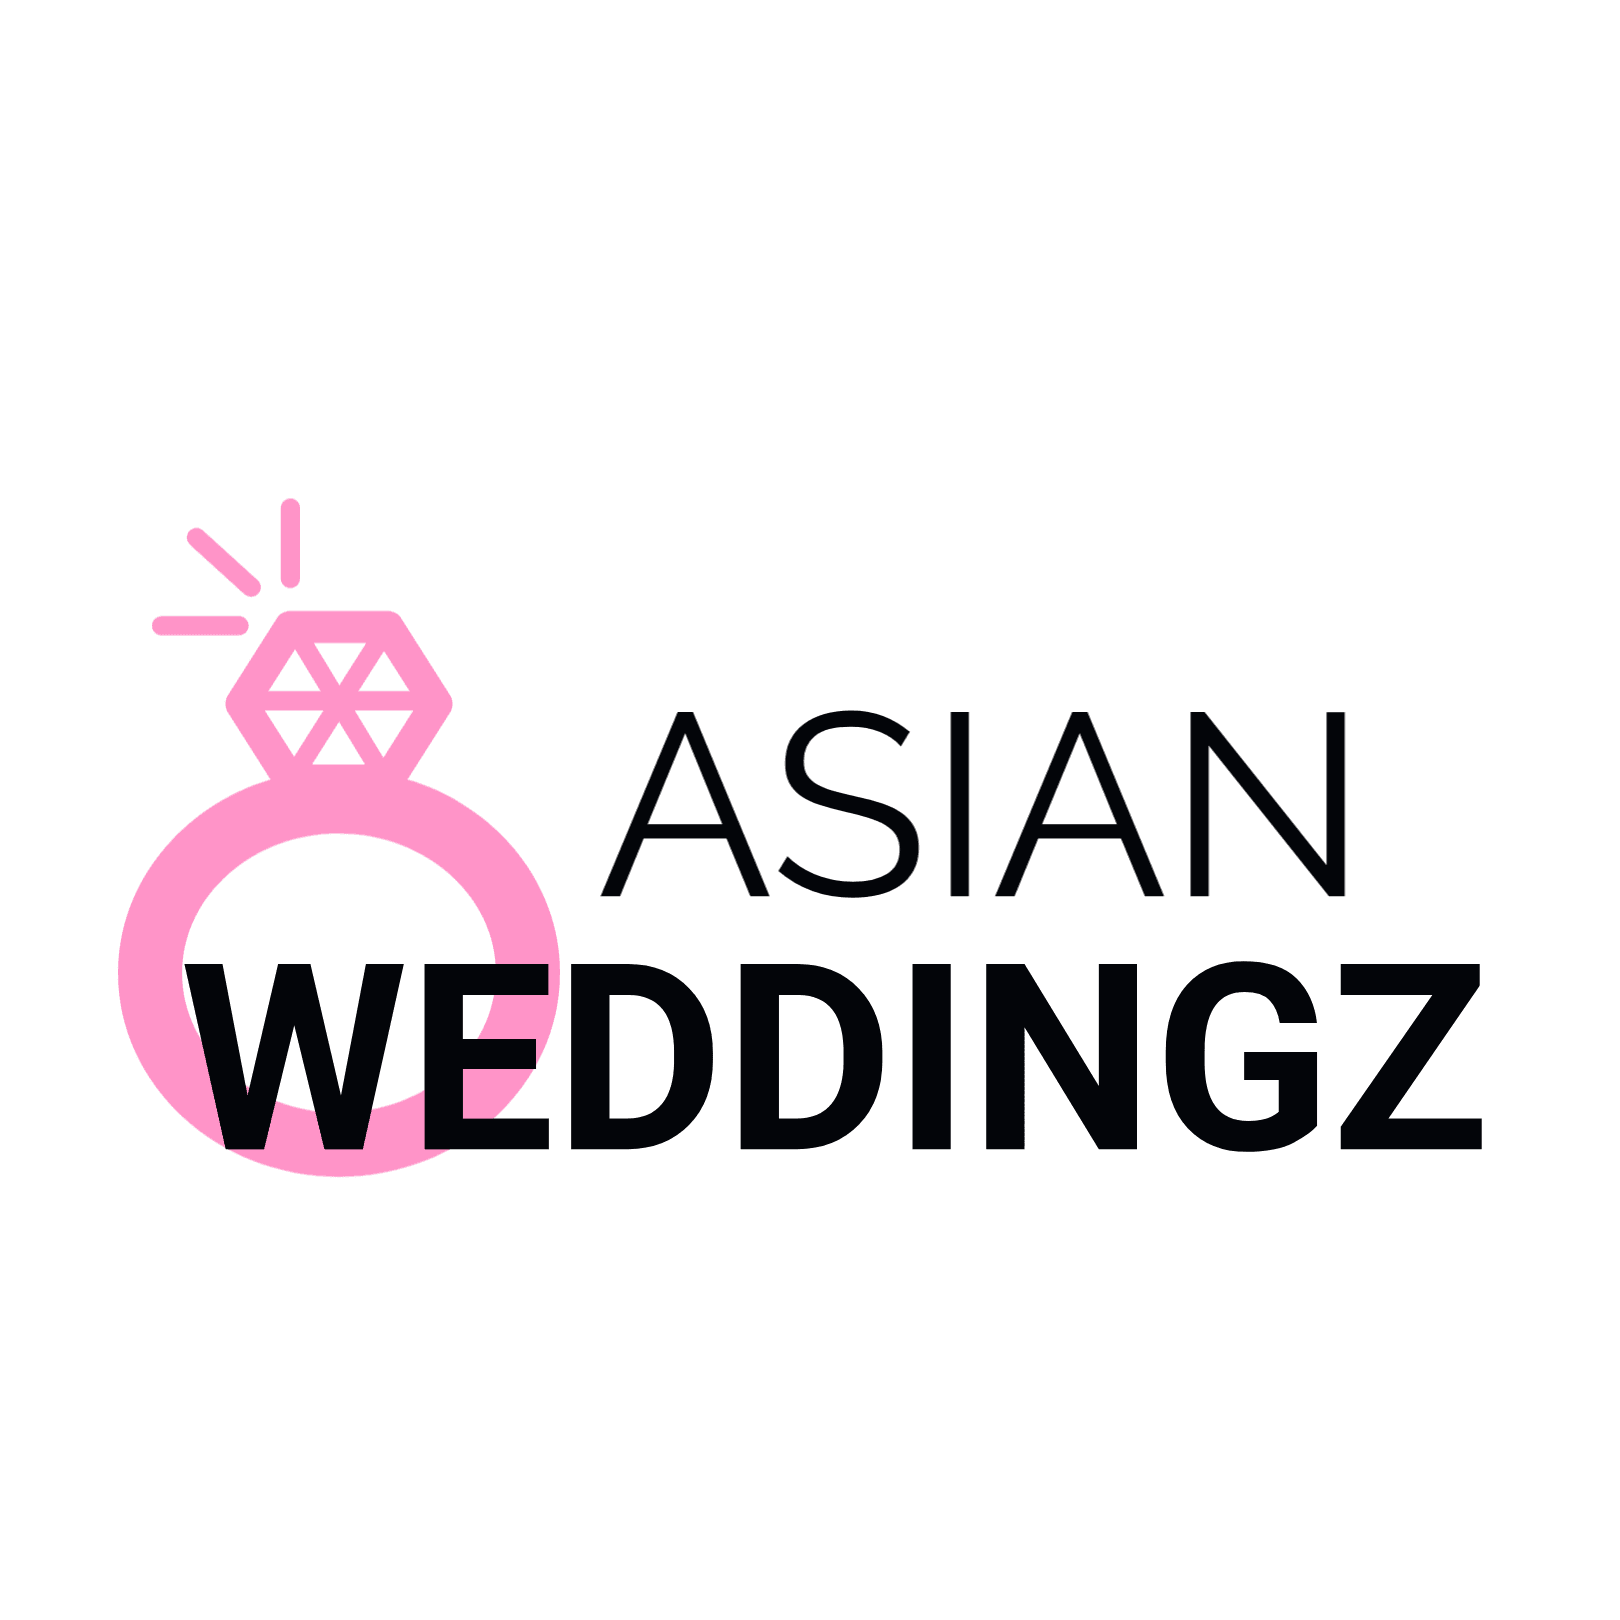 Asian Weddingz